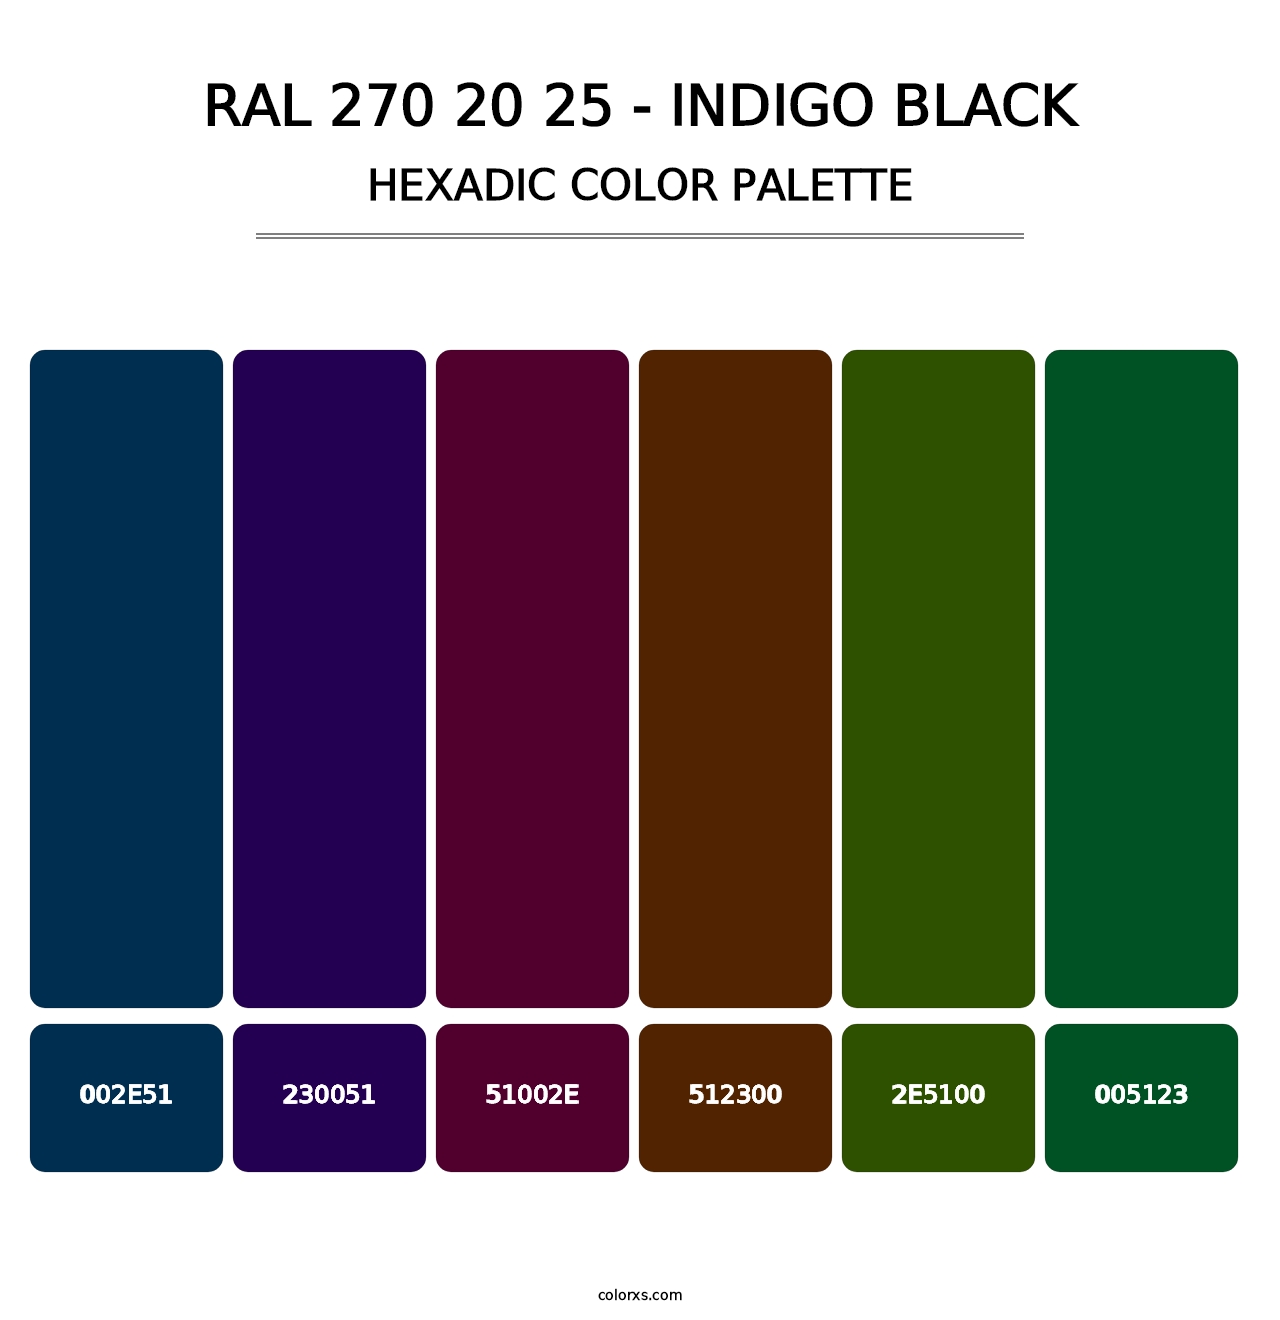 RAL 270 20 25 - Indigo Black - Hexadic Color Palette